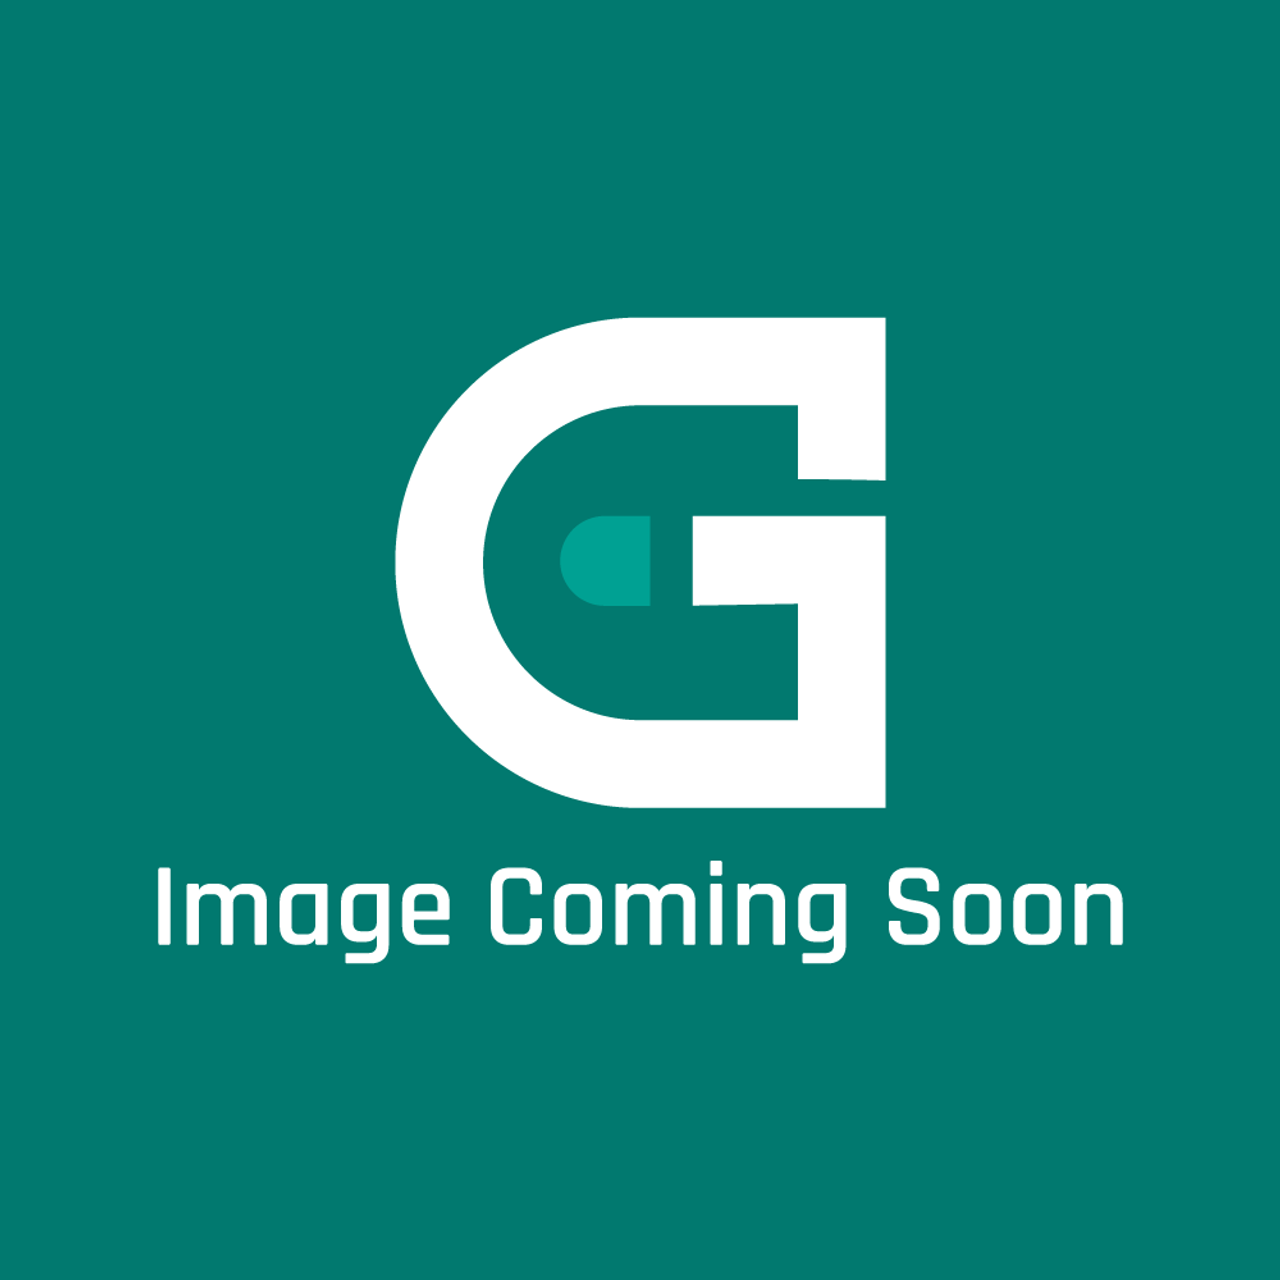 Frigidaire - Electrolux 5304501979 Evaporator - Image Coming Soon!